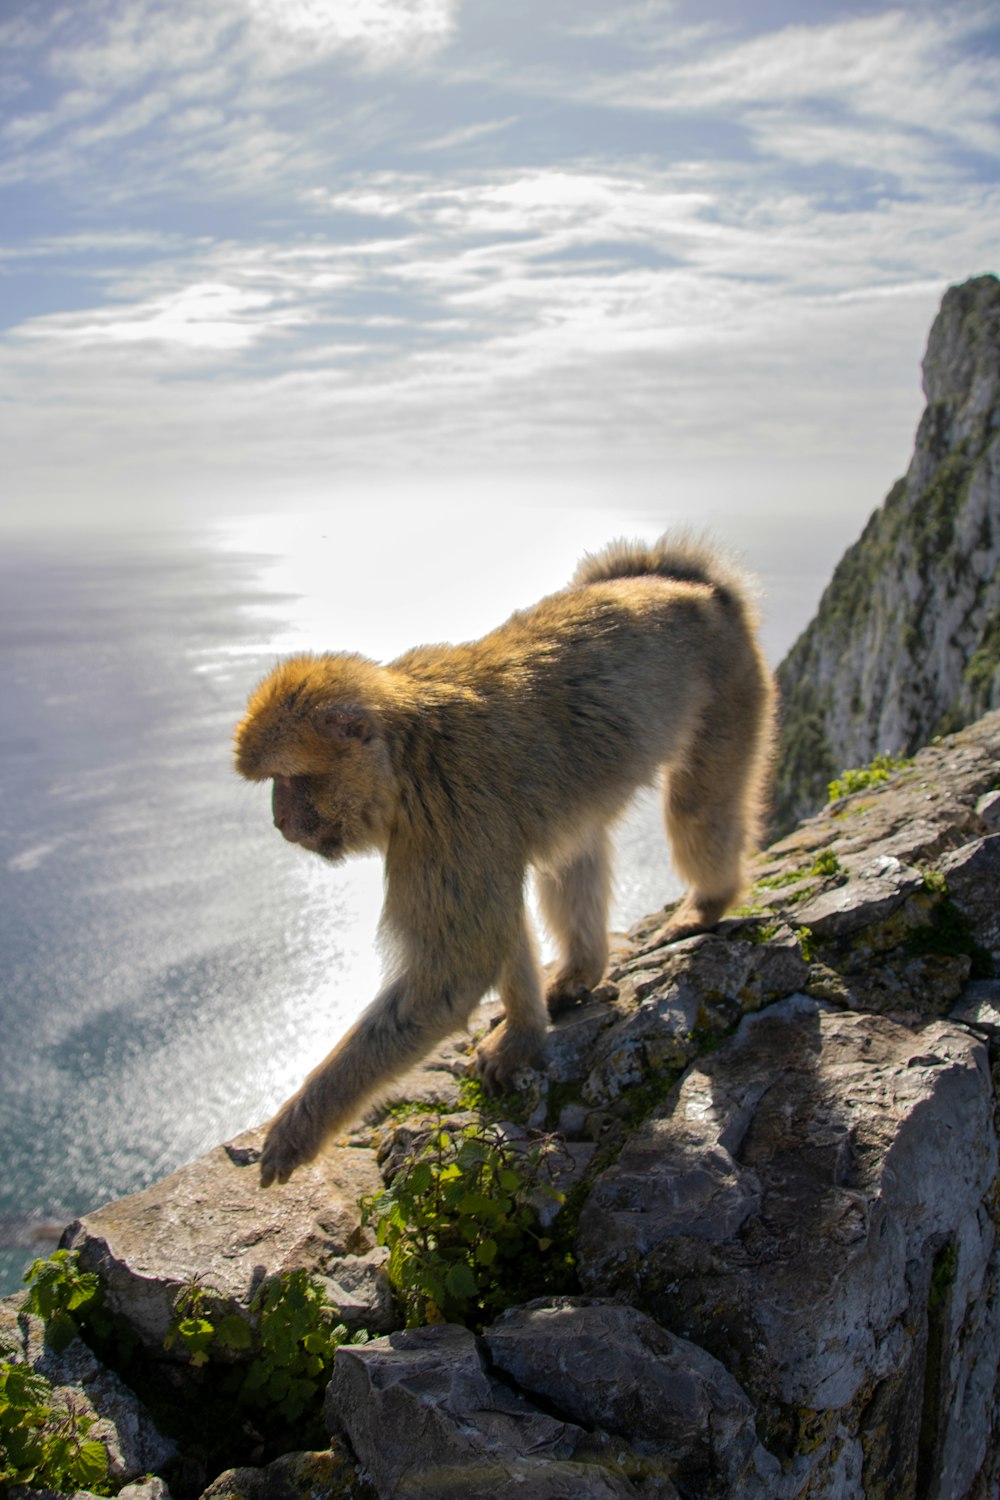 a monkey walking on a rocky cliff by the ocean